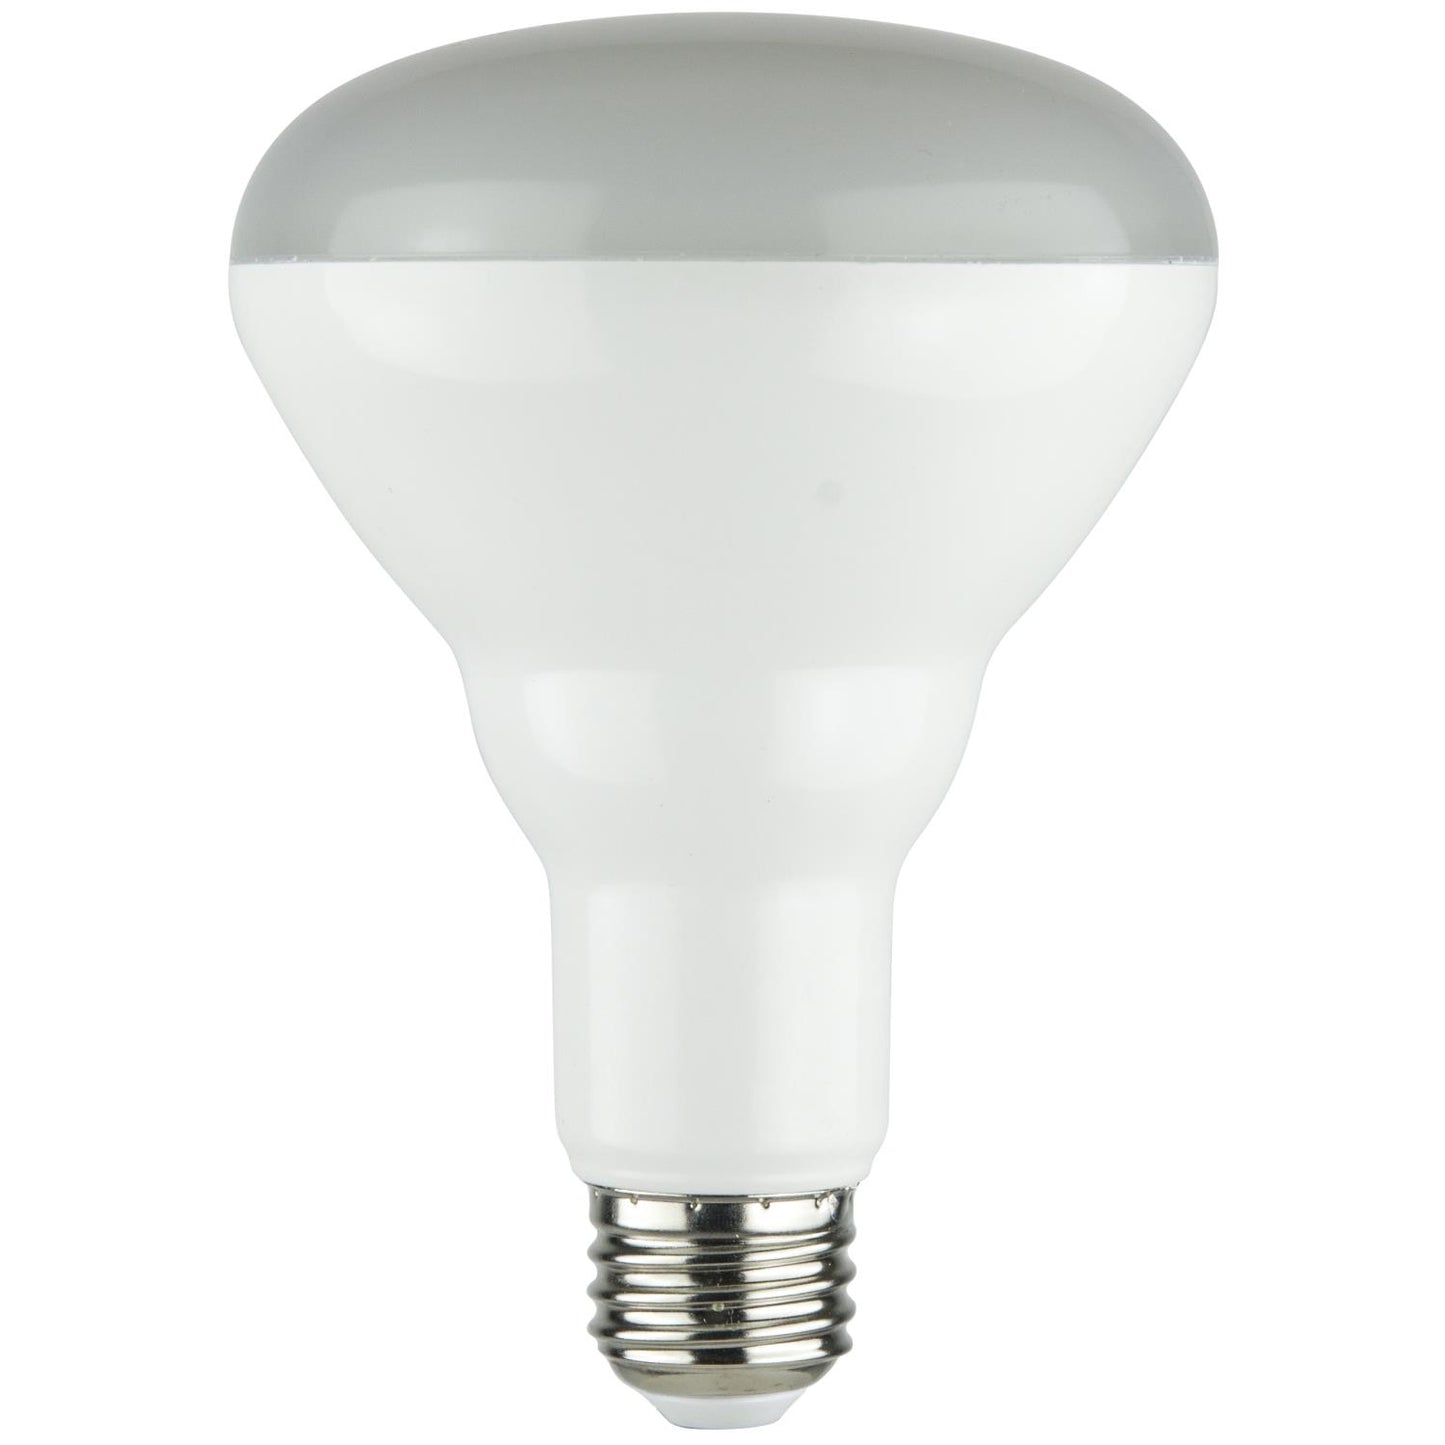 Sunlite BR30 Reflector, 750 Lumens, Medium Base Light Bulb, Warm White